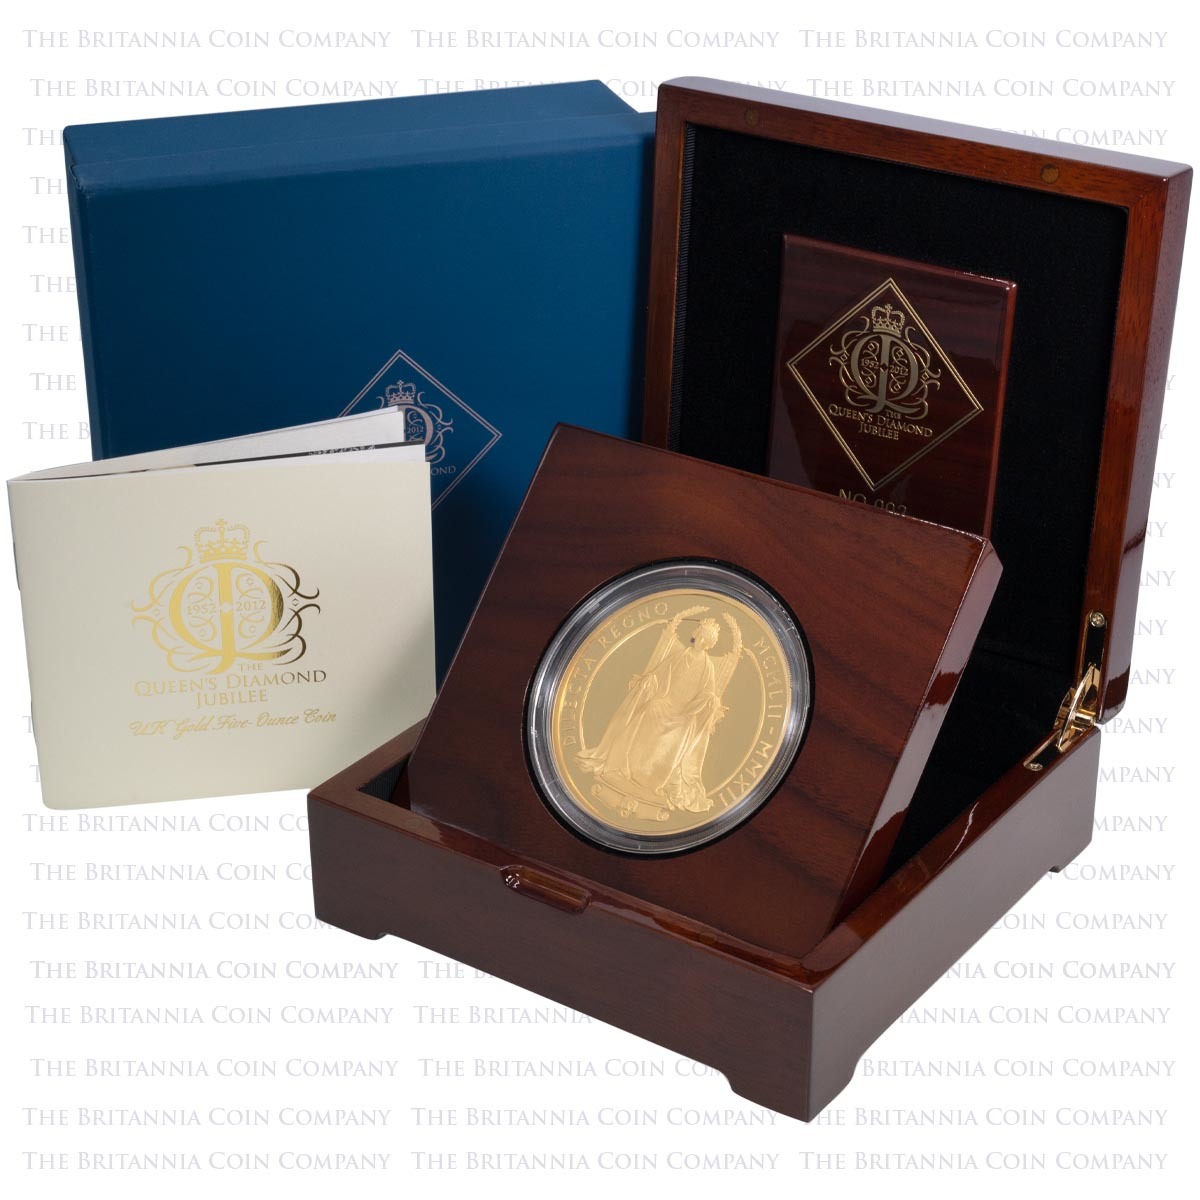 UKDJ5OZG 2012 Queen Elizabeth II Diamond Jubilee Five Ounce Gold Proof Coin Boxed